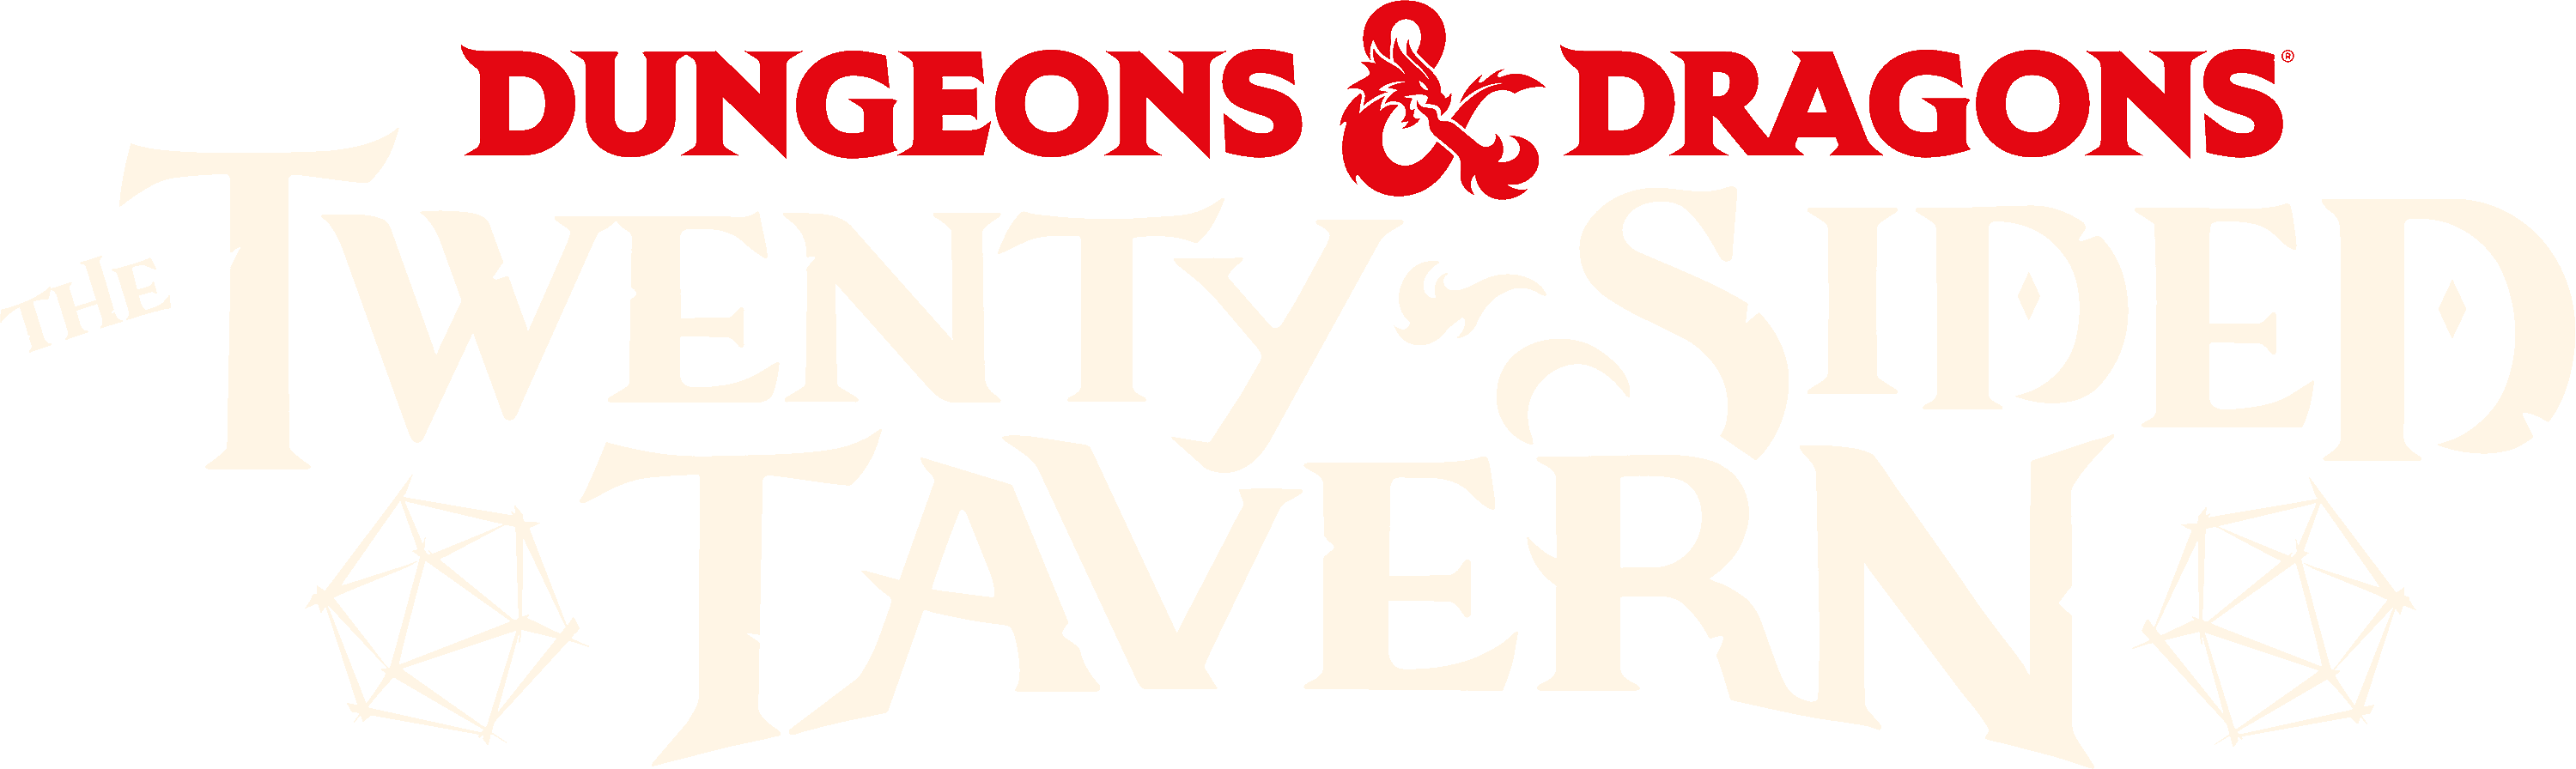 Dungeons & Dragons The Twenty-Sided Tavern